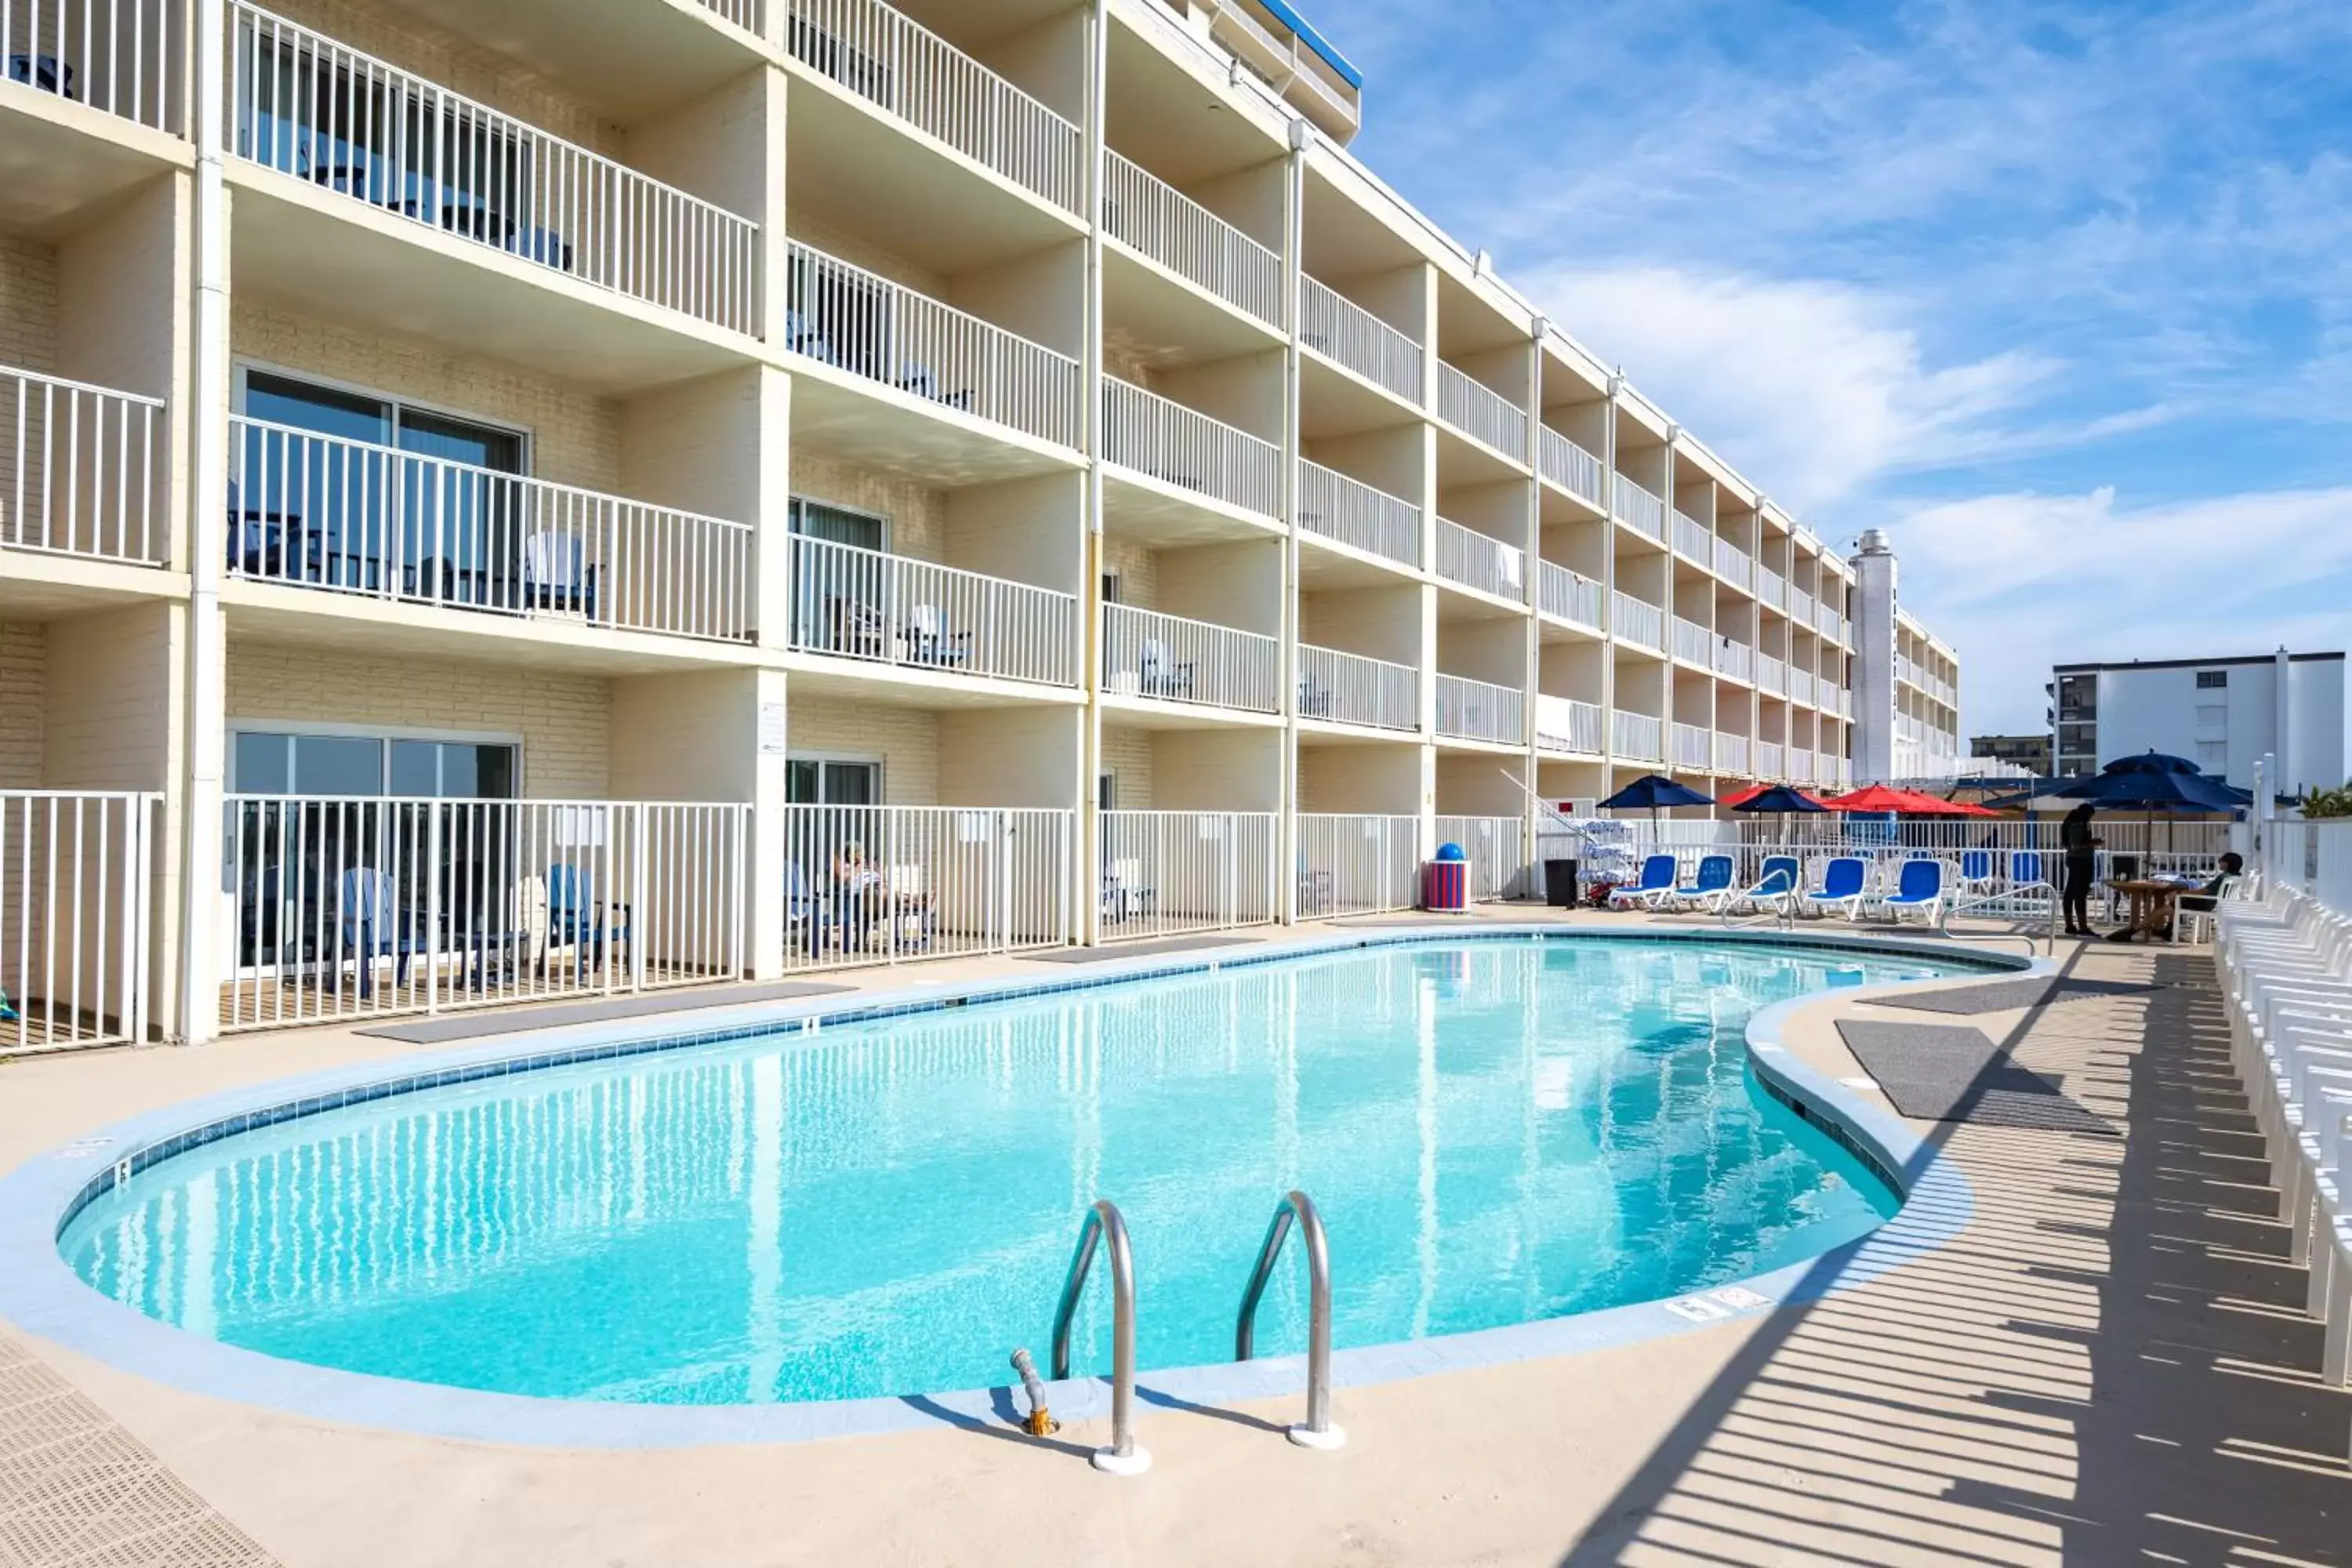 Swimming Pool in Carousel Resort Hotel and Condominiums